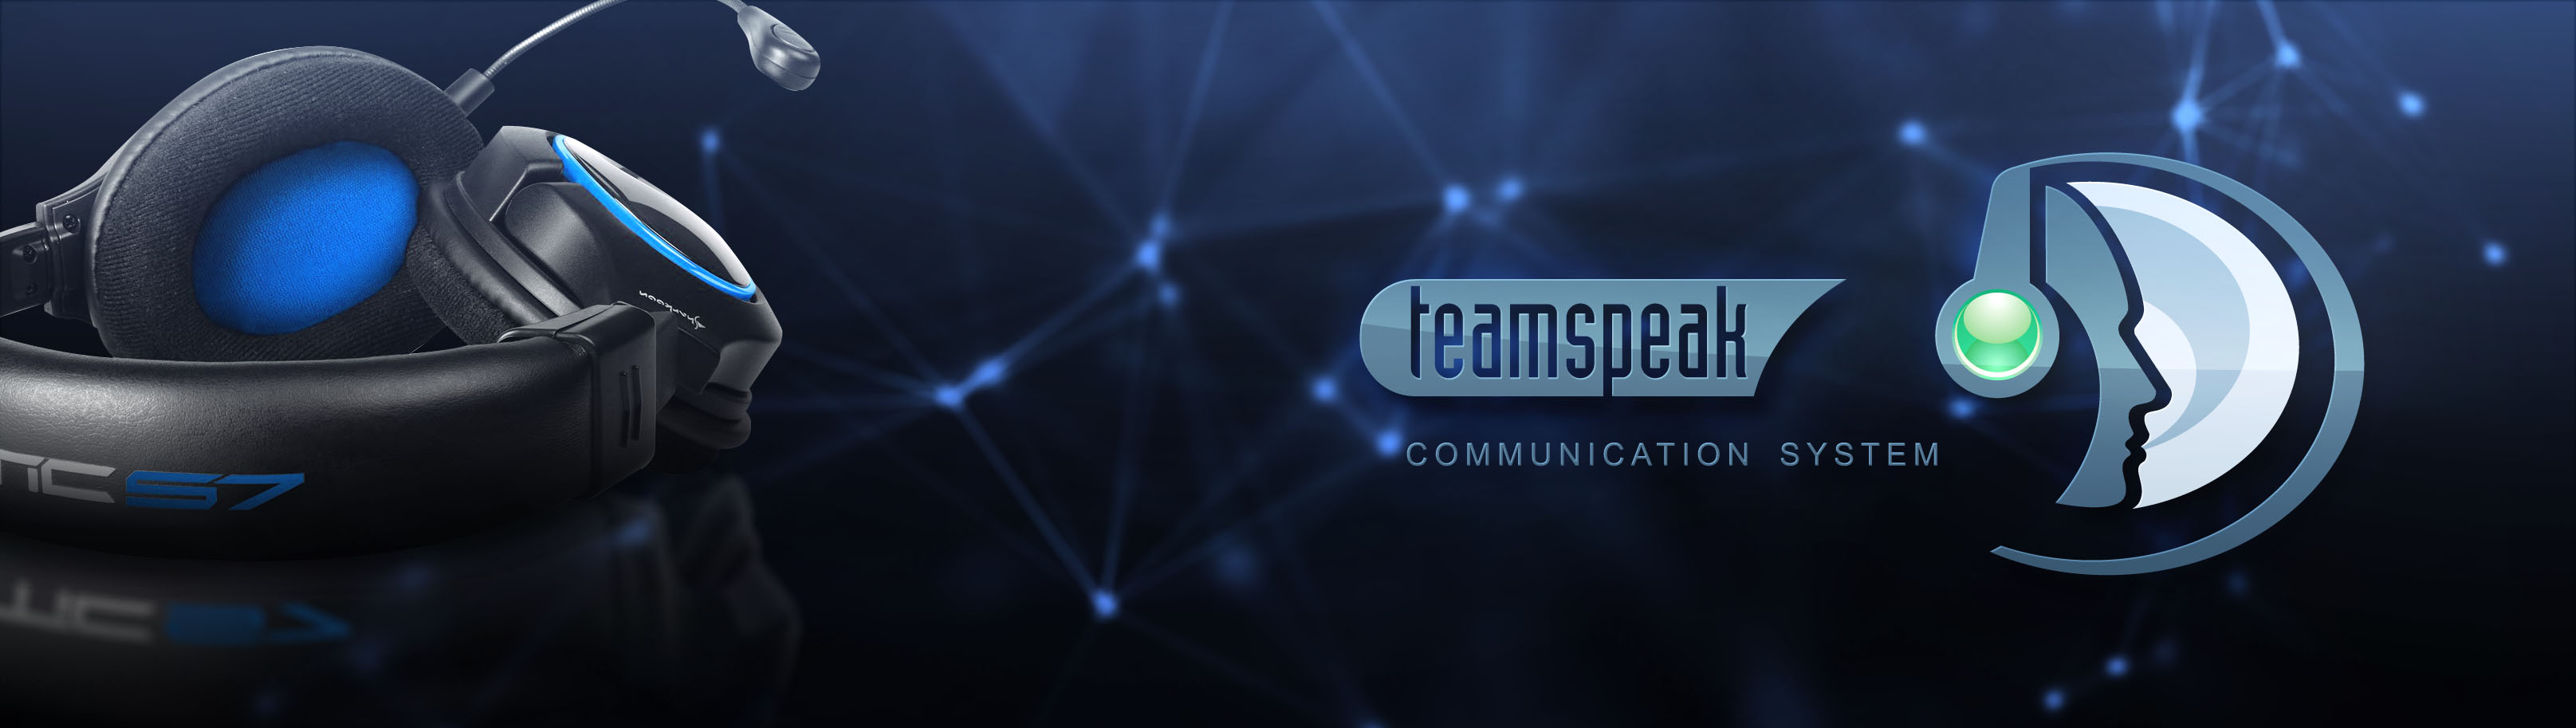 free teamspeak server no ads